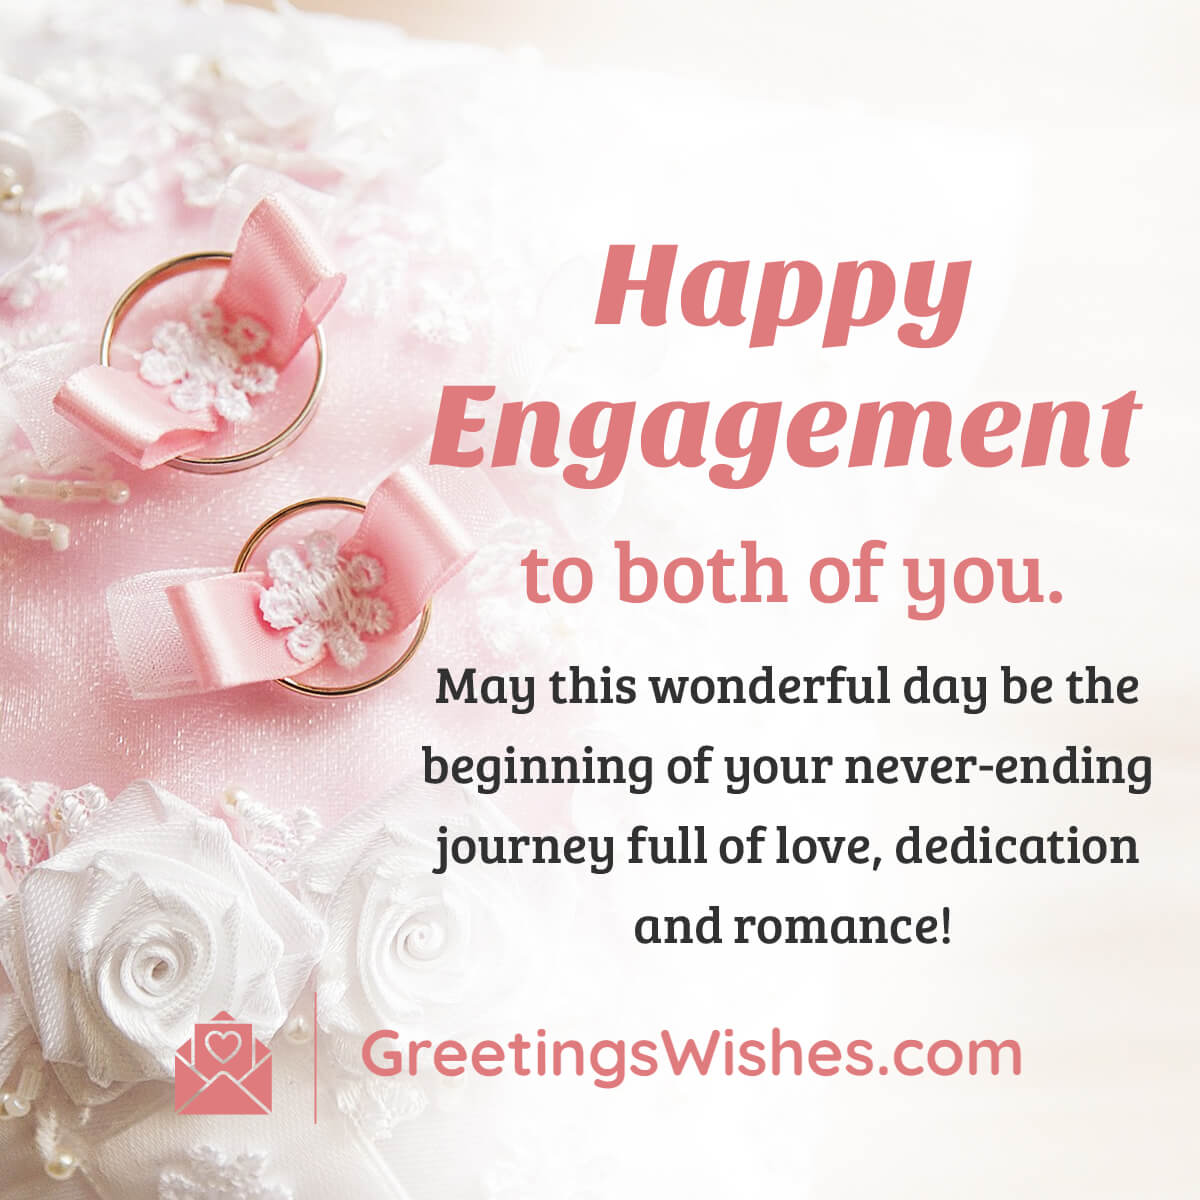 Happy Engagement Greetings